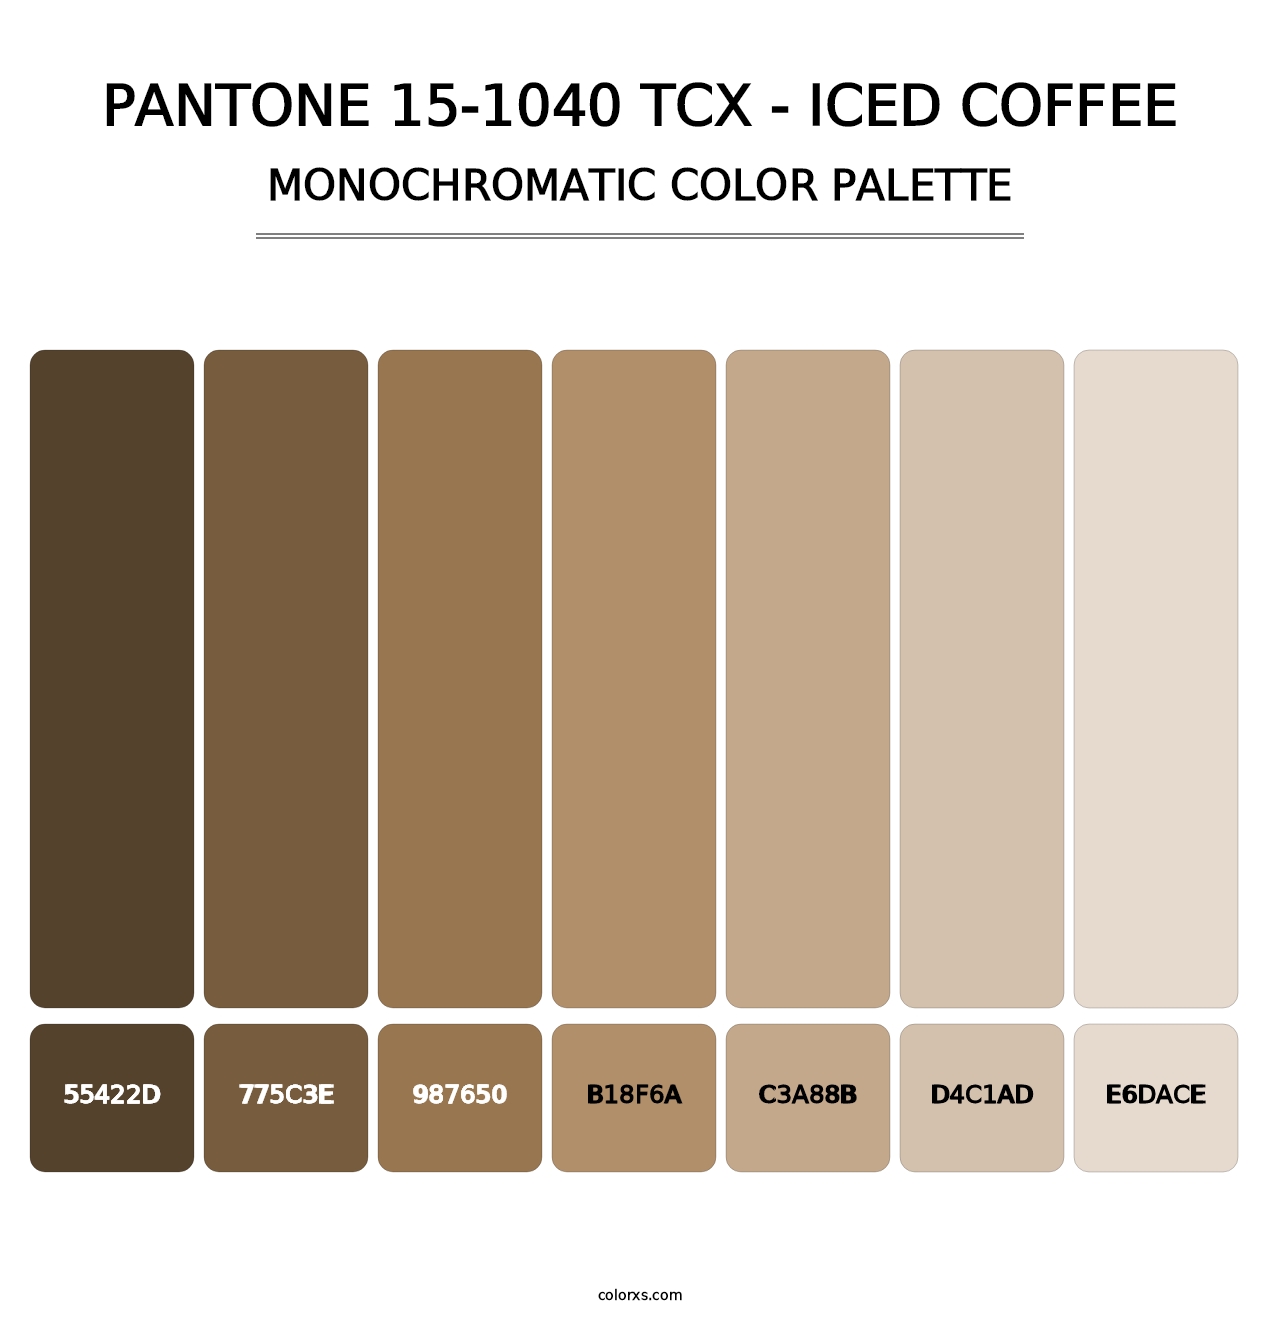 PANTONE 15-1040 TCX - Iced Coffee - Monochromatic Color Palette